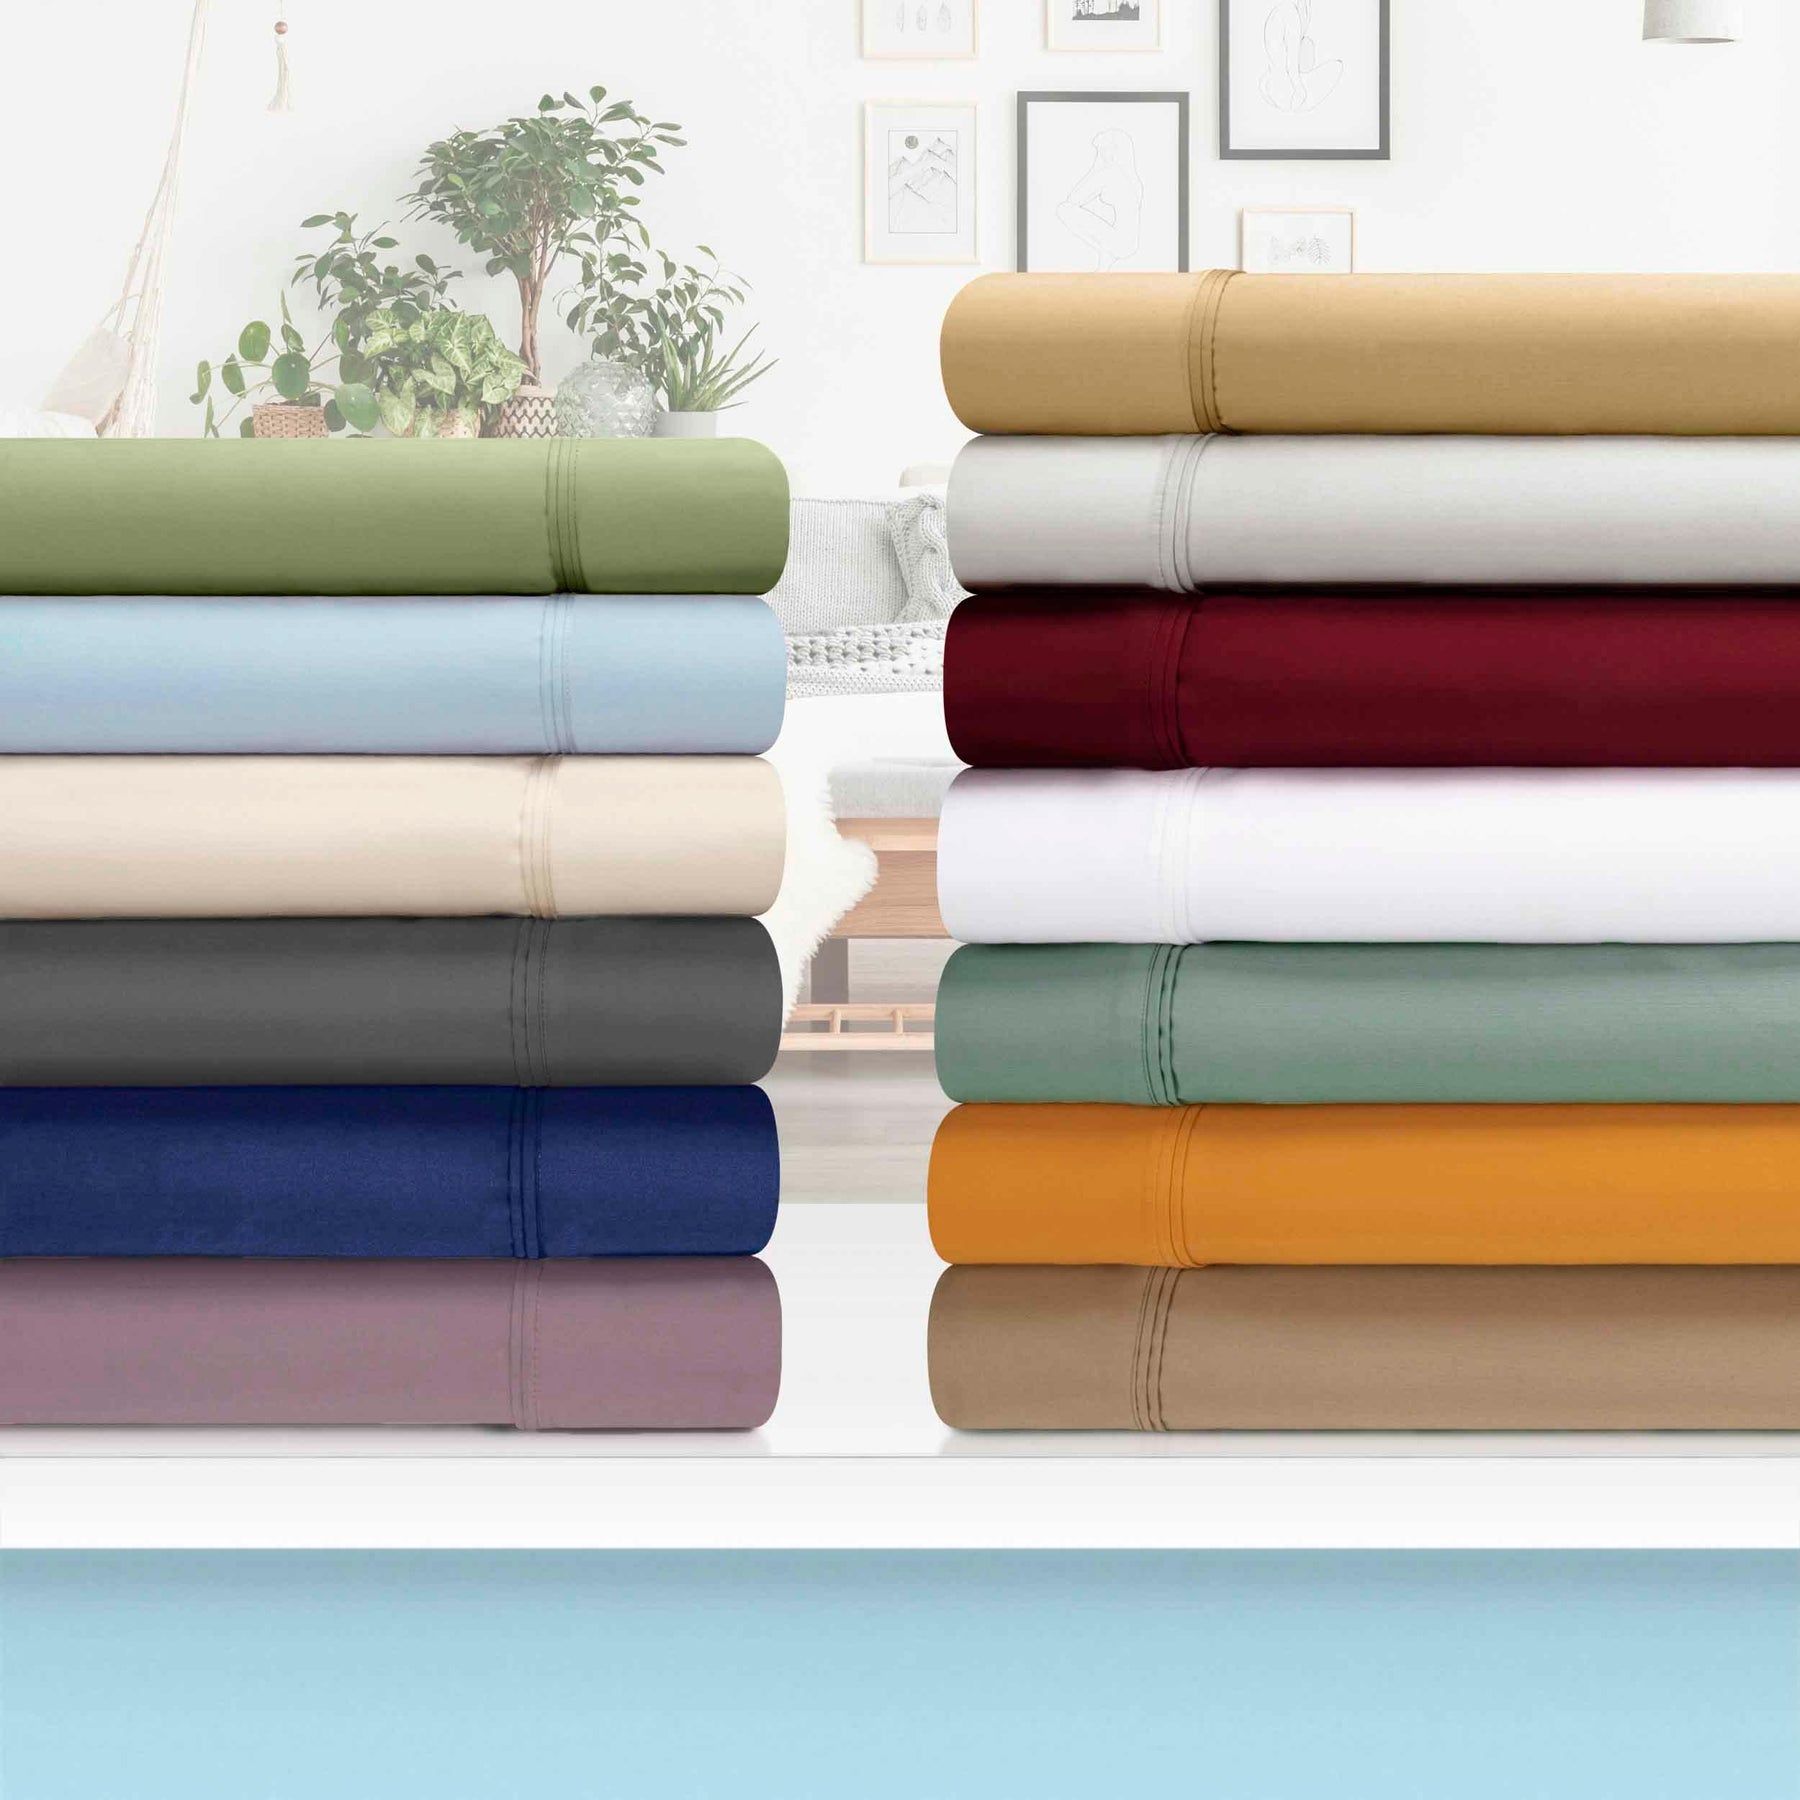 1200 Thread Count Egyptian Cotton 2 Piece Pillowcase Set - Pillowcases by Superior - Superior 